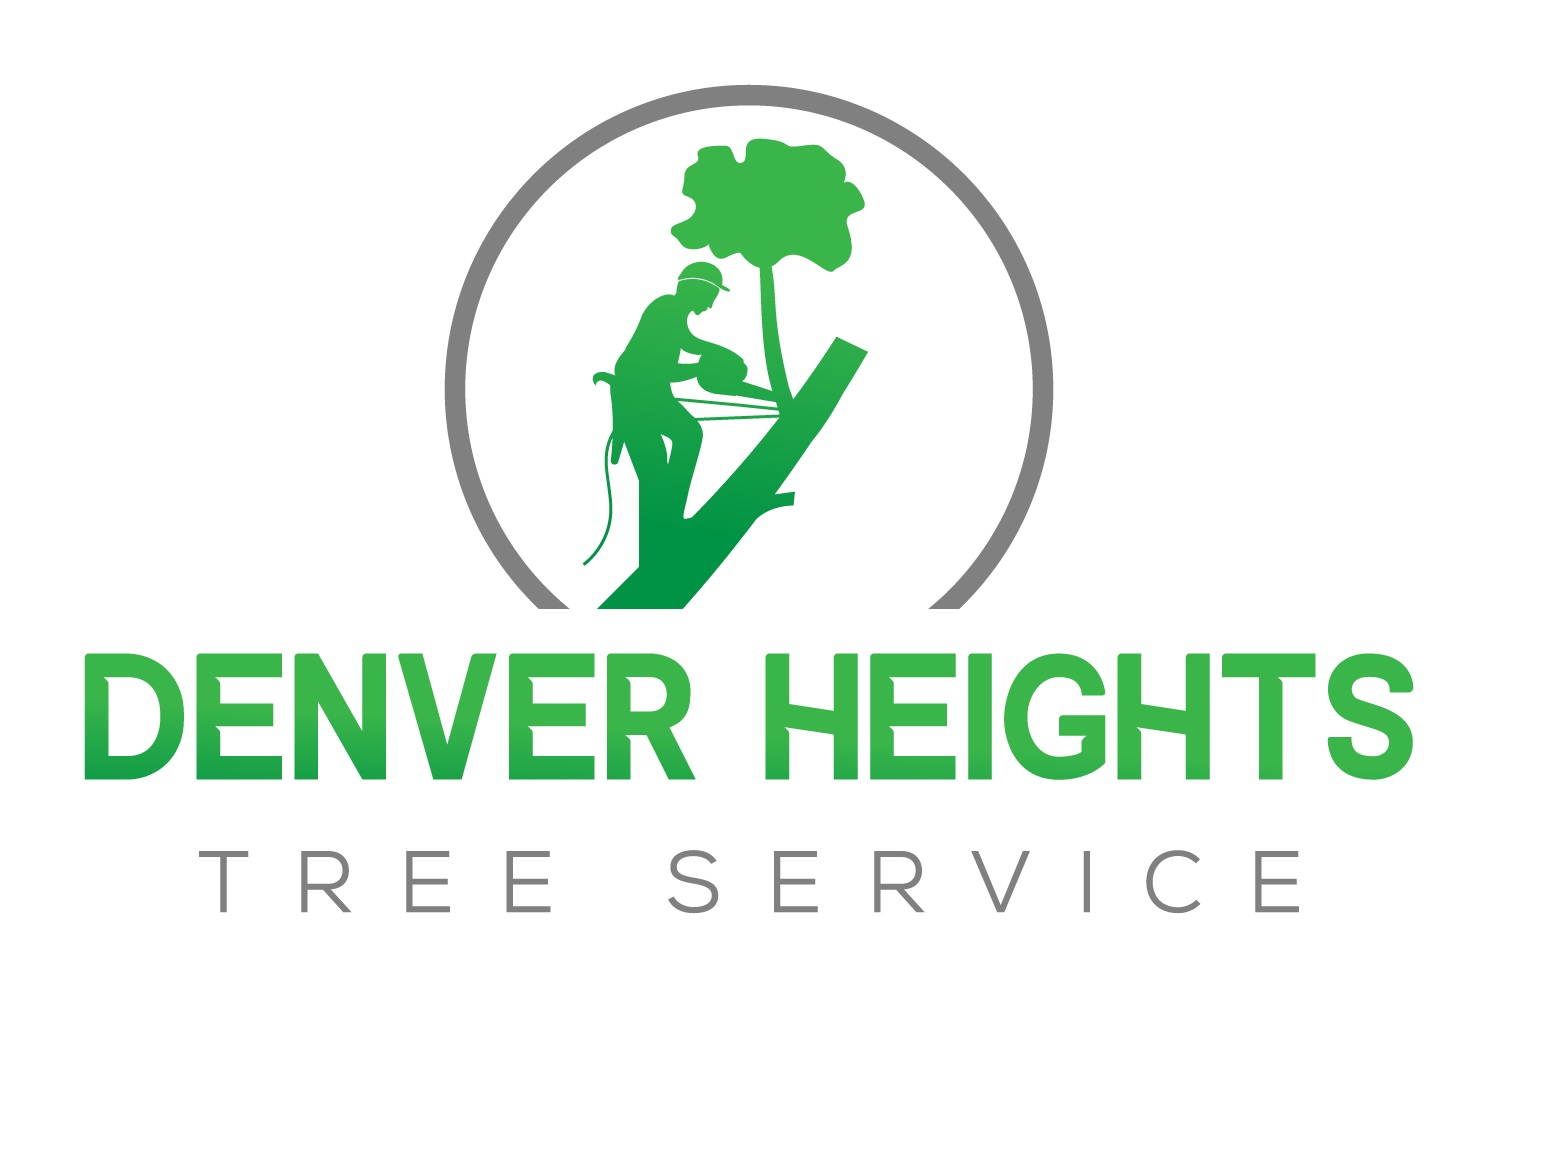 Denver Heights Tree Service